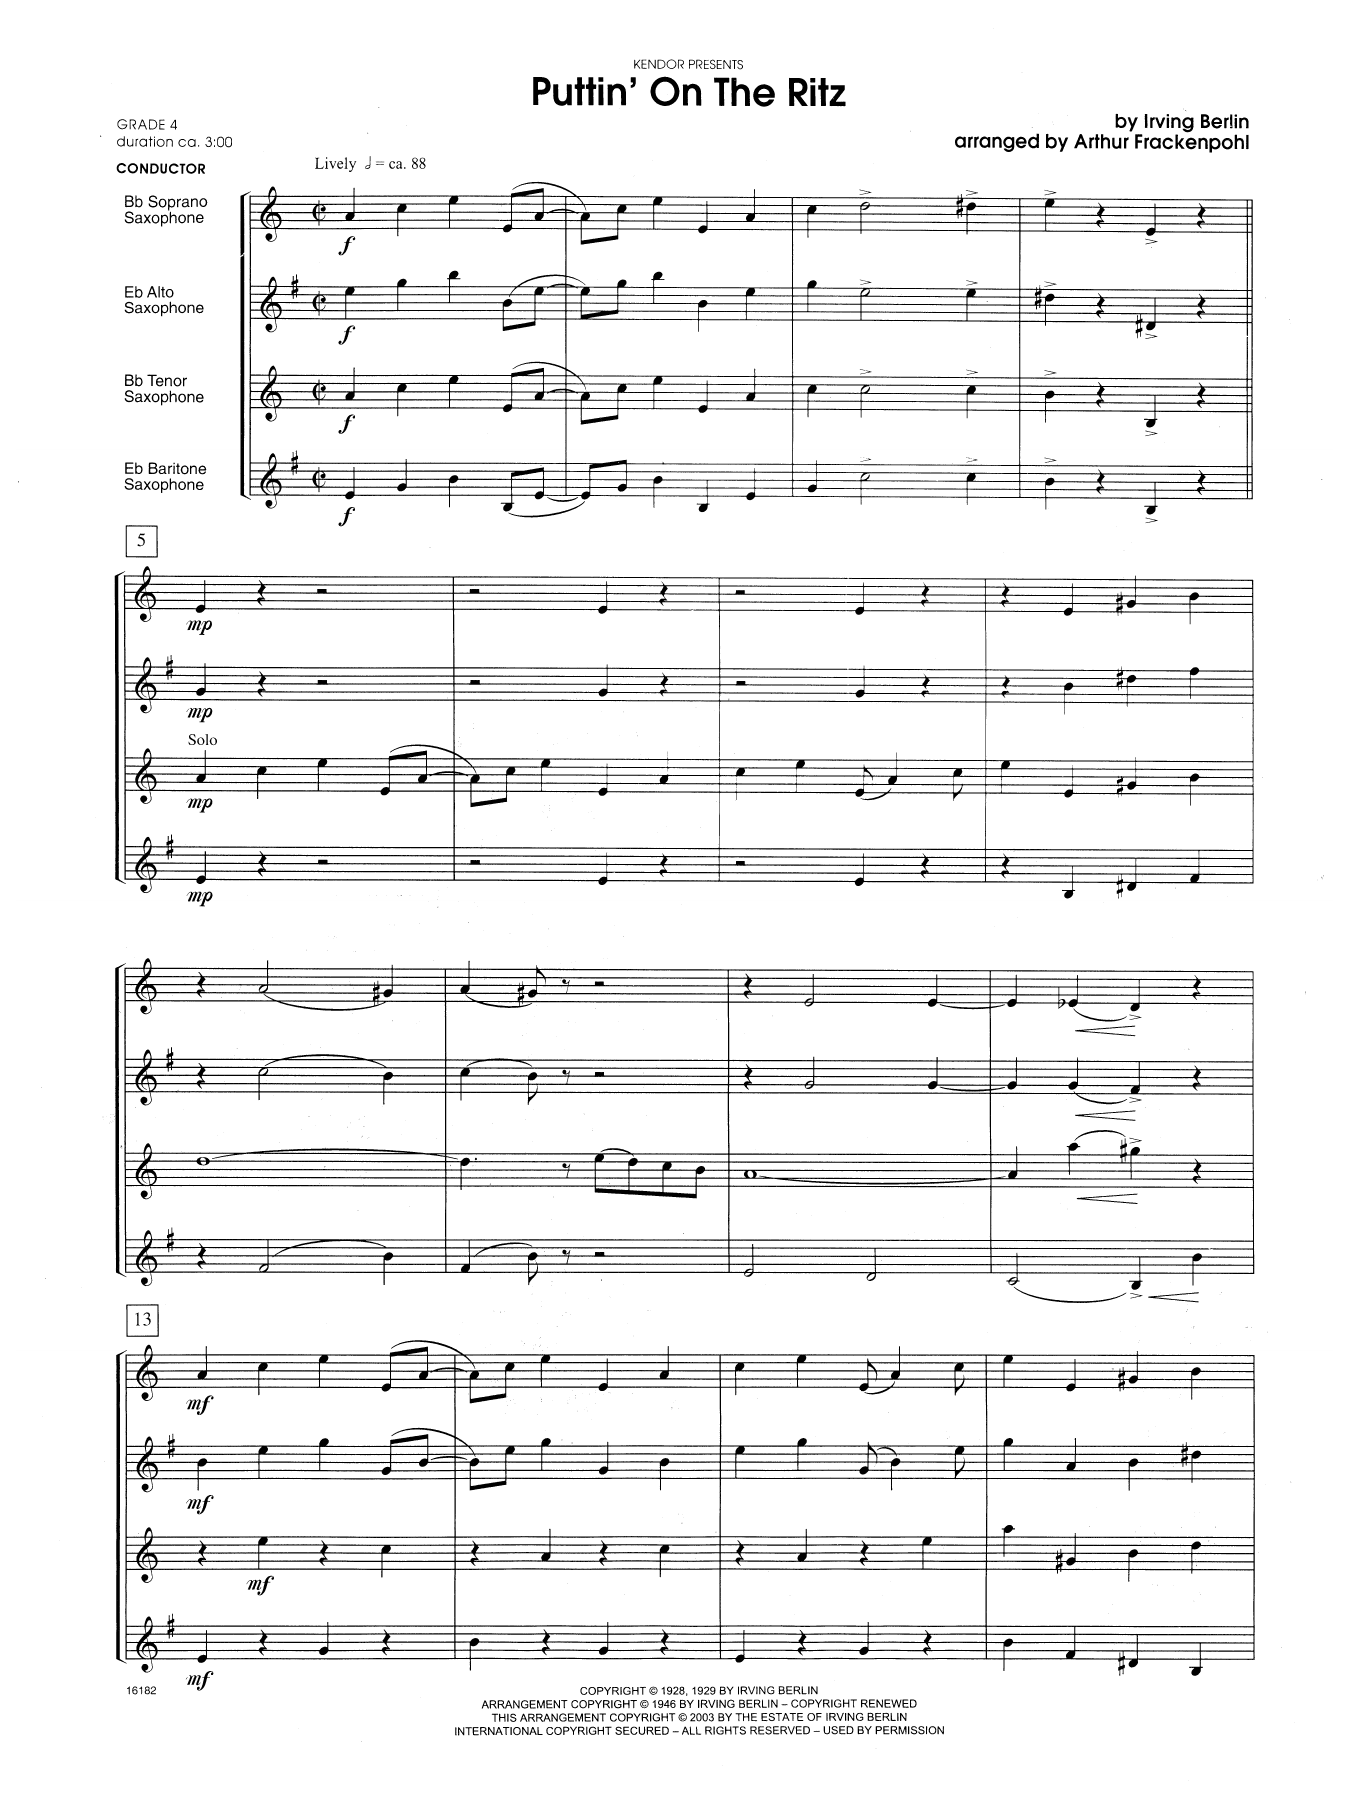 Arthur Frackenpohl Puttin' on the Ritz - Full Score sheet music notes and chords. Download Printable PDF.